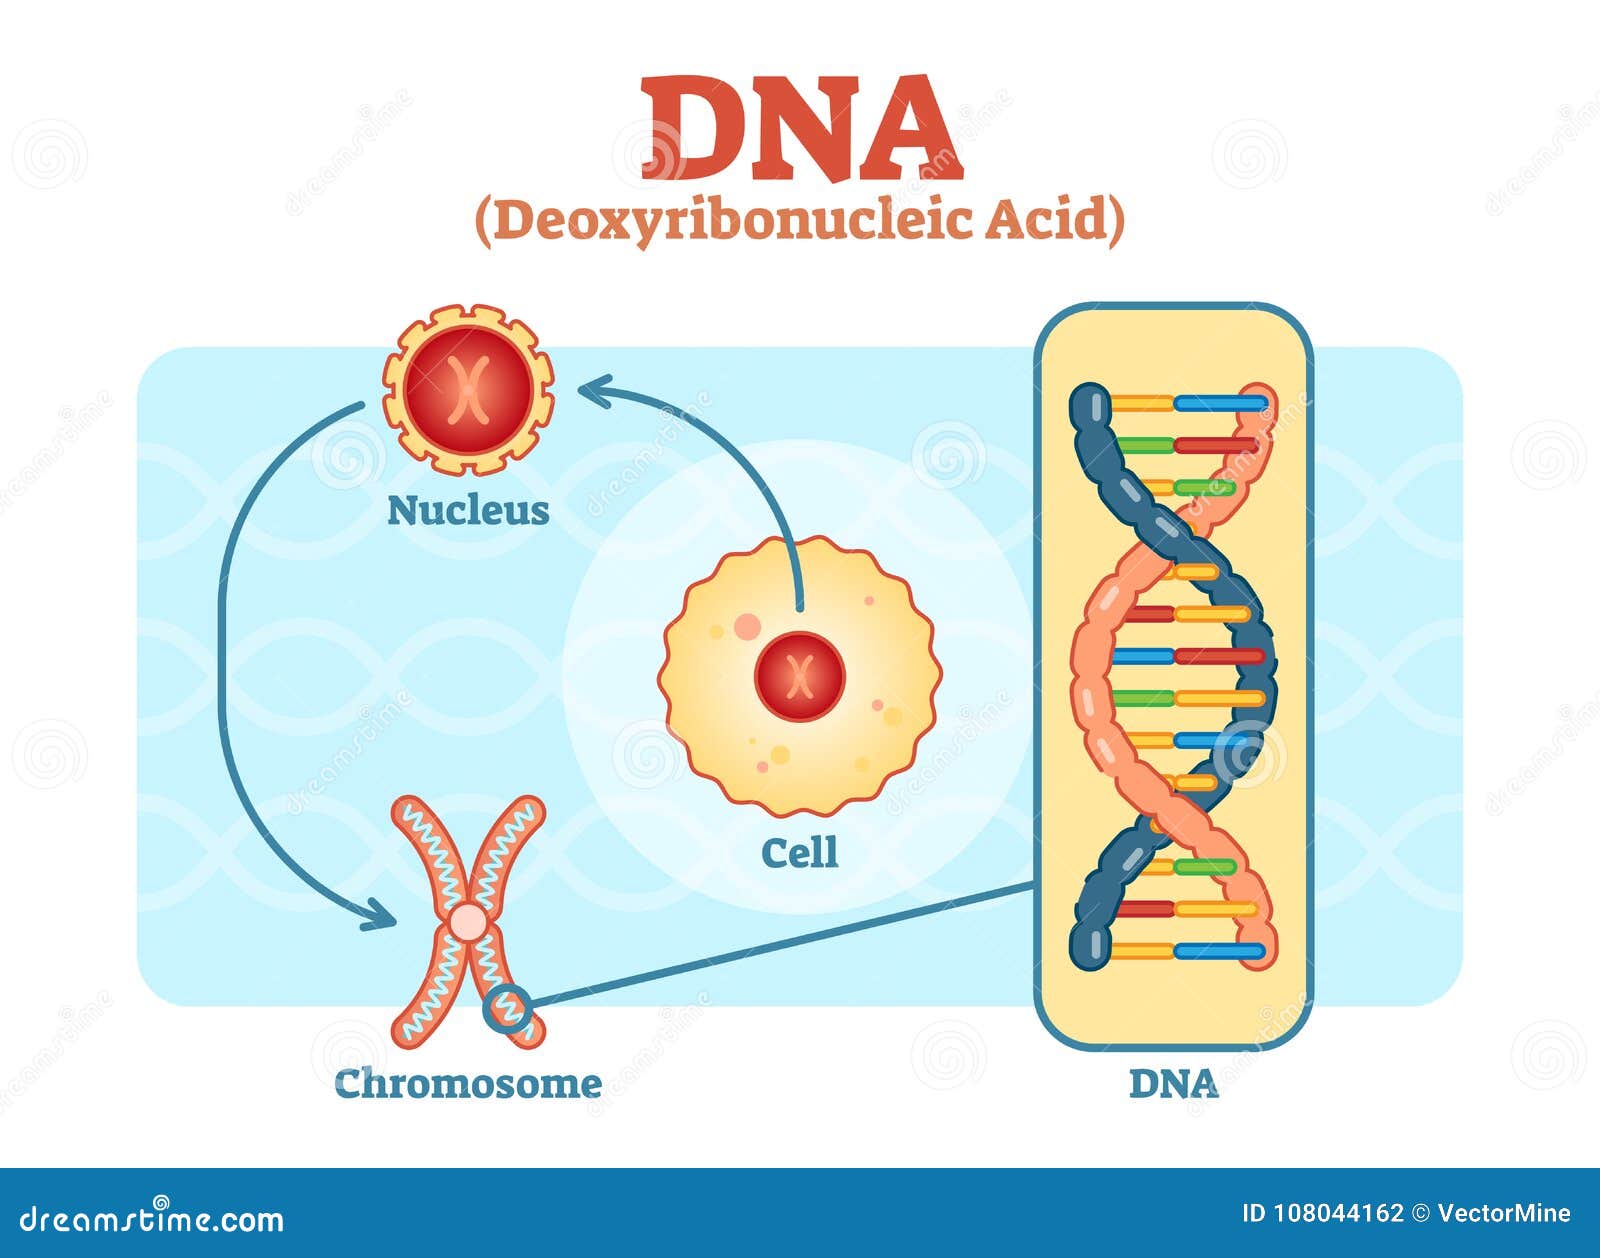 cell - nucleus - chromosome - dna, medical  diagram